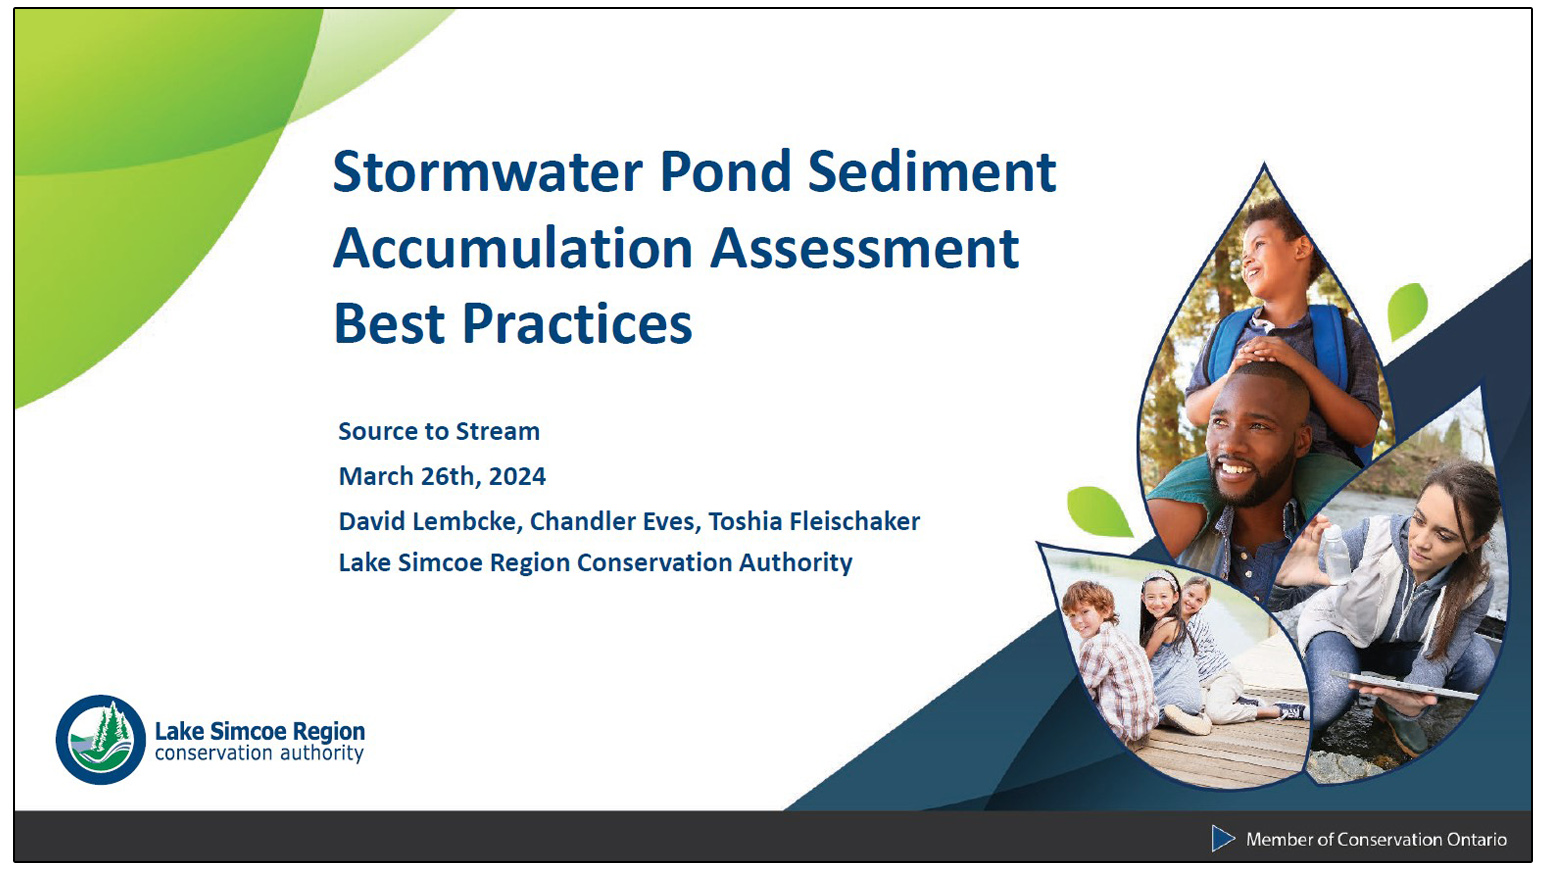 Stormwater Pond Sediment Accumulation Assessment Best Practices - presentation by David Lembcke